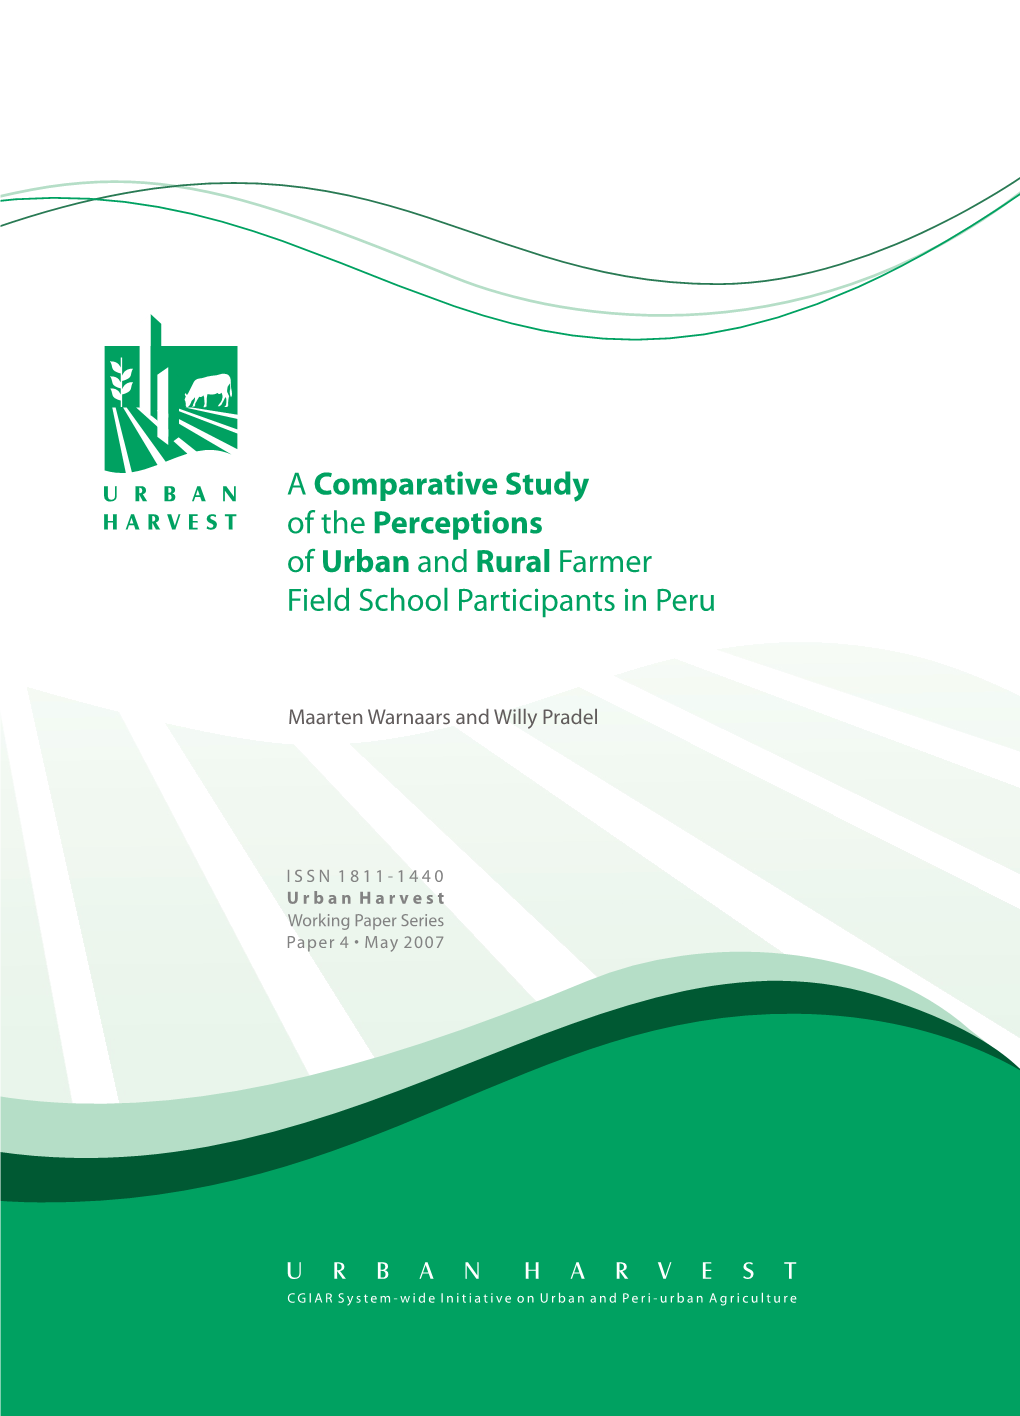 A Comparative Study of the Perceptions of Urban and Rural Farmer Field School Participants in Peru